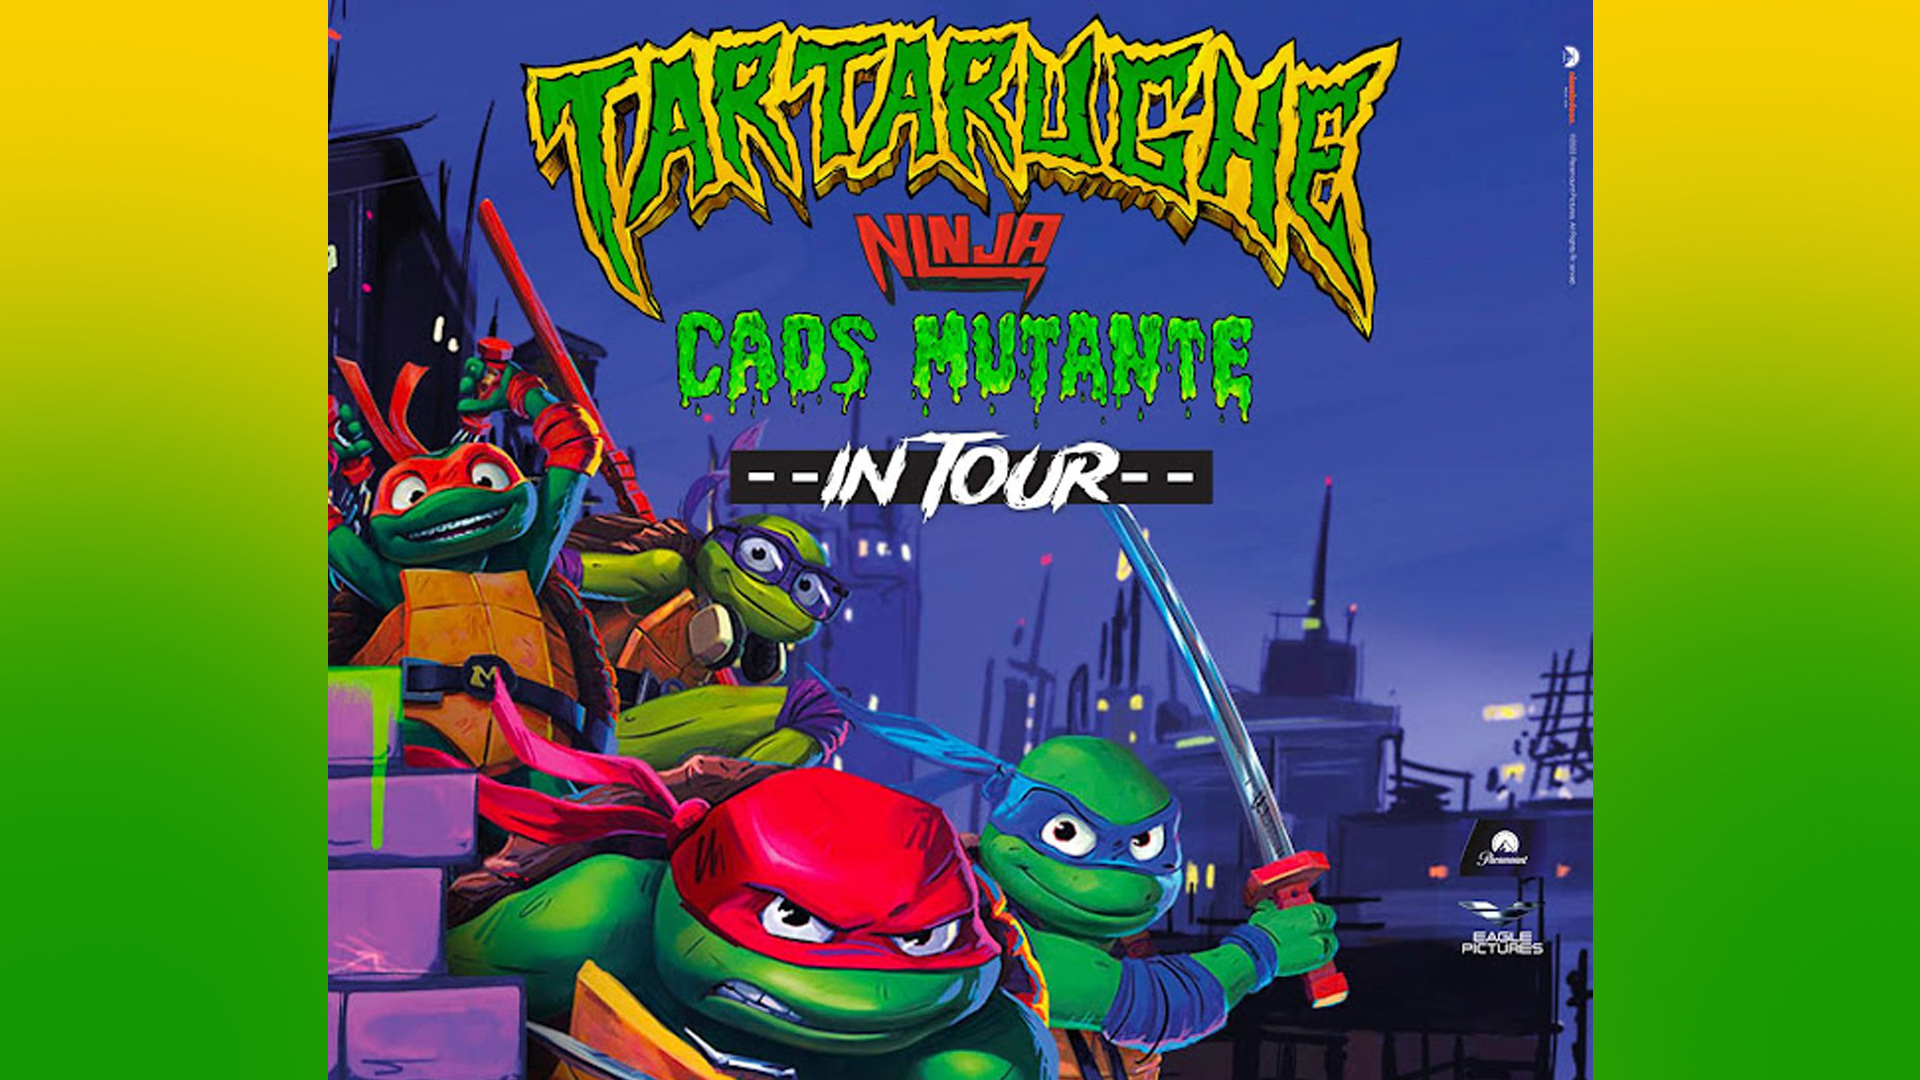 COWABUNGA! Tartarughe Ninja Tour